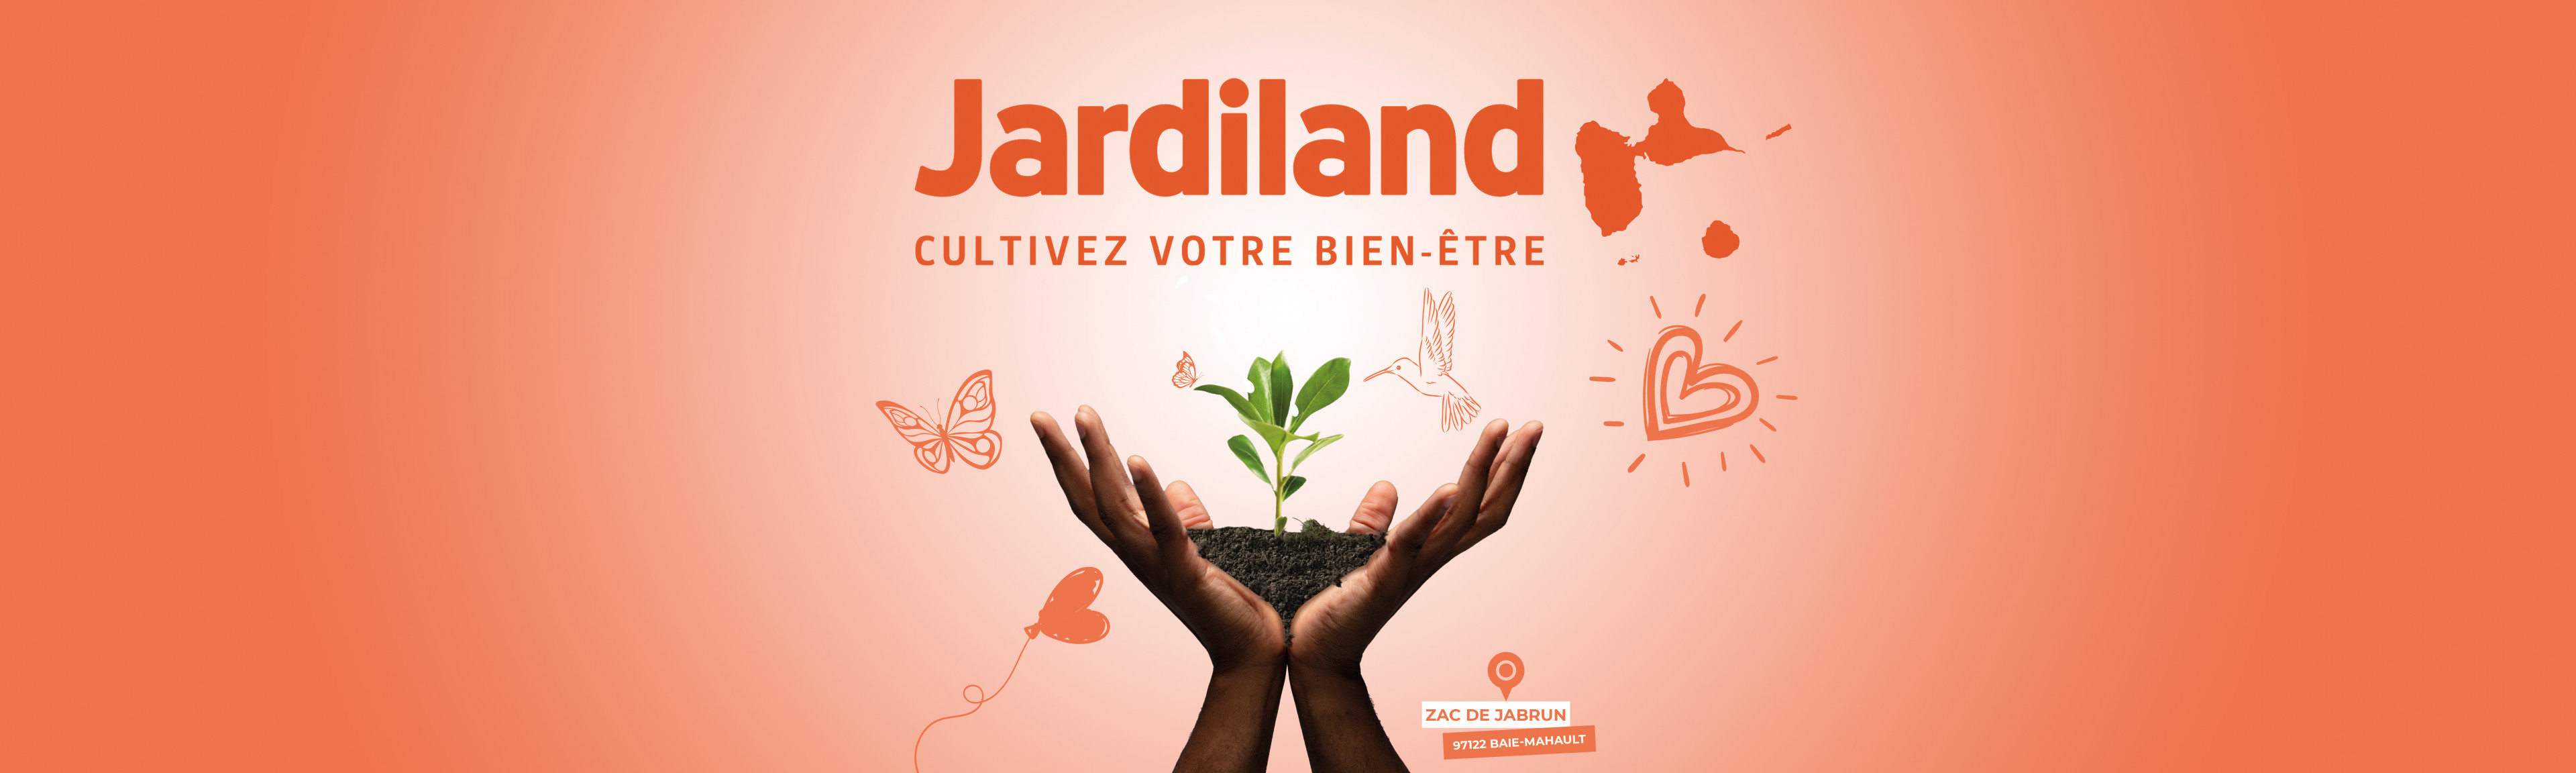 Jardin Aquatique - Jardiland Guadeloupe